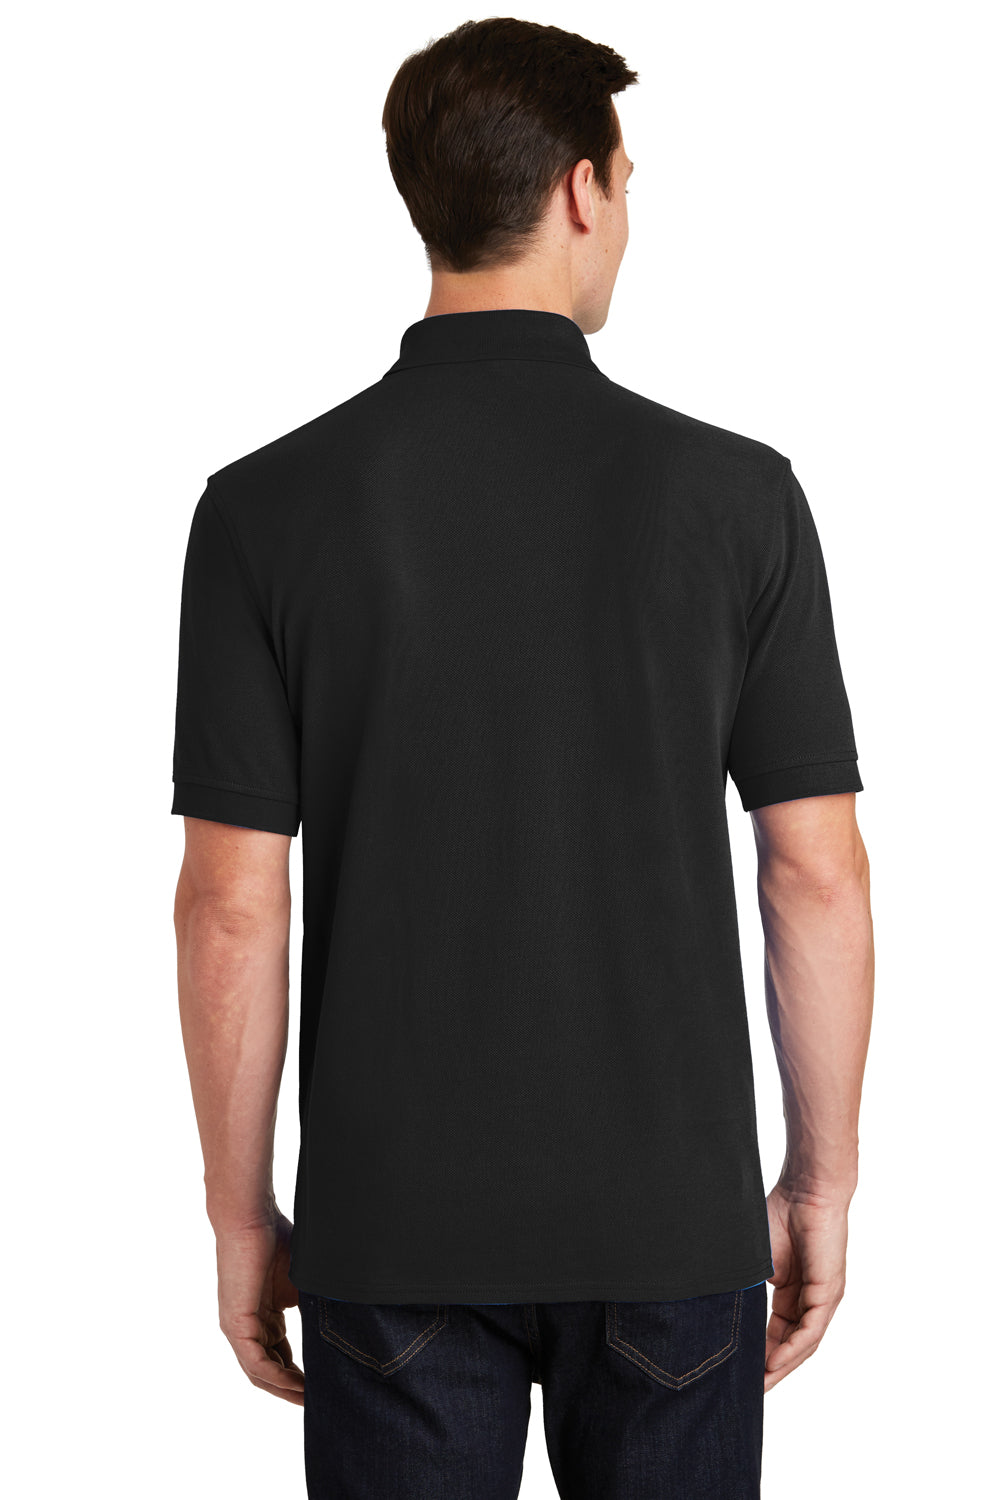 Port & Company KP1500 Mens Stain Resistant Short Sleeve Polo Shirt Black Back